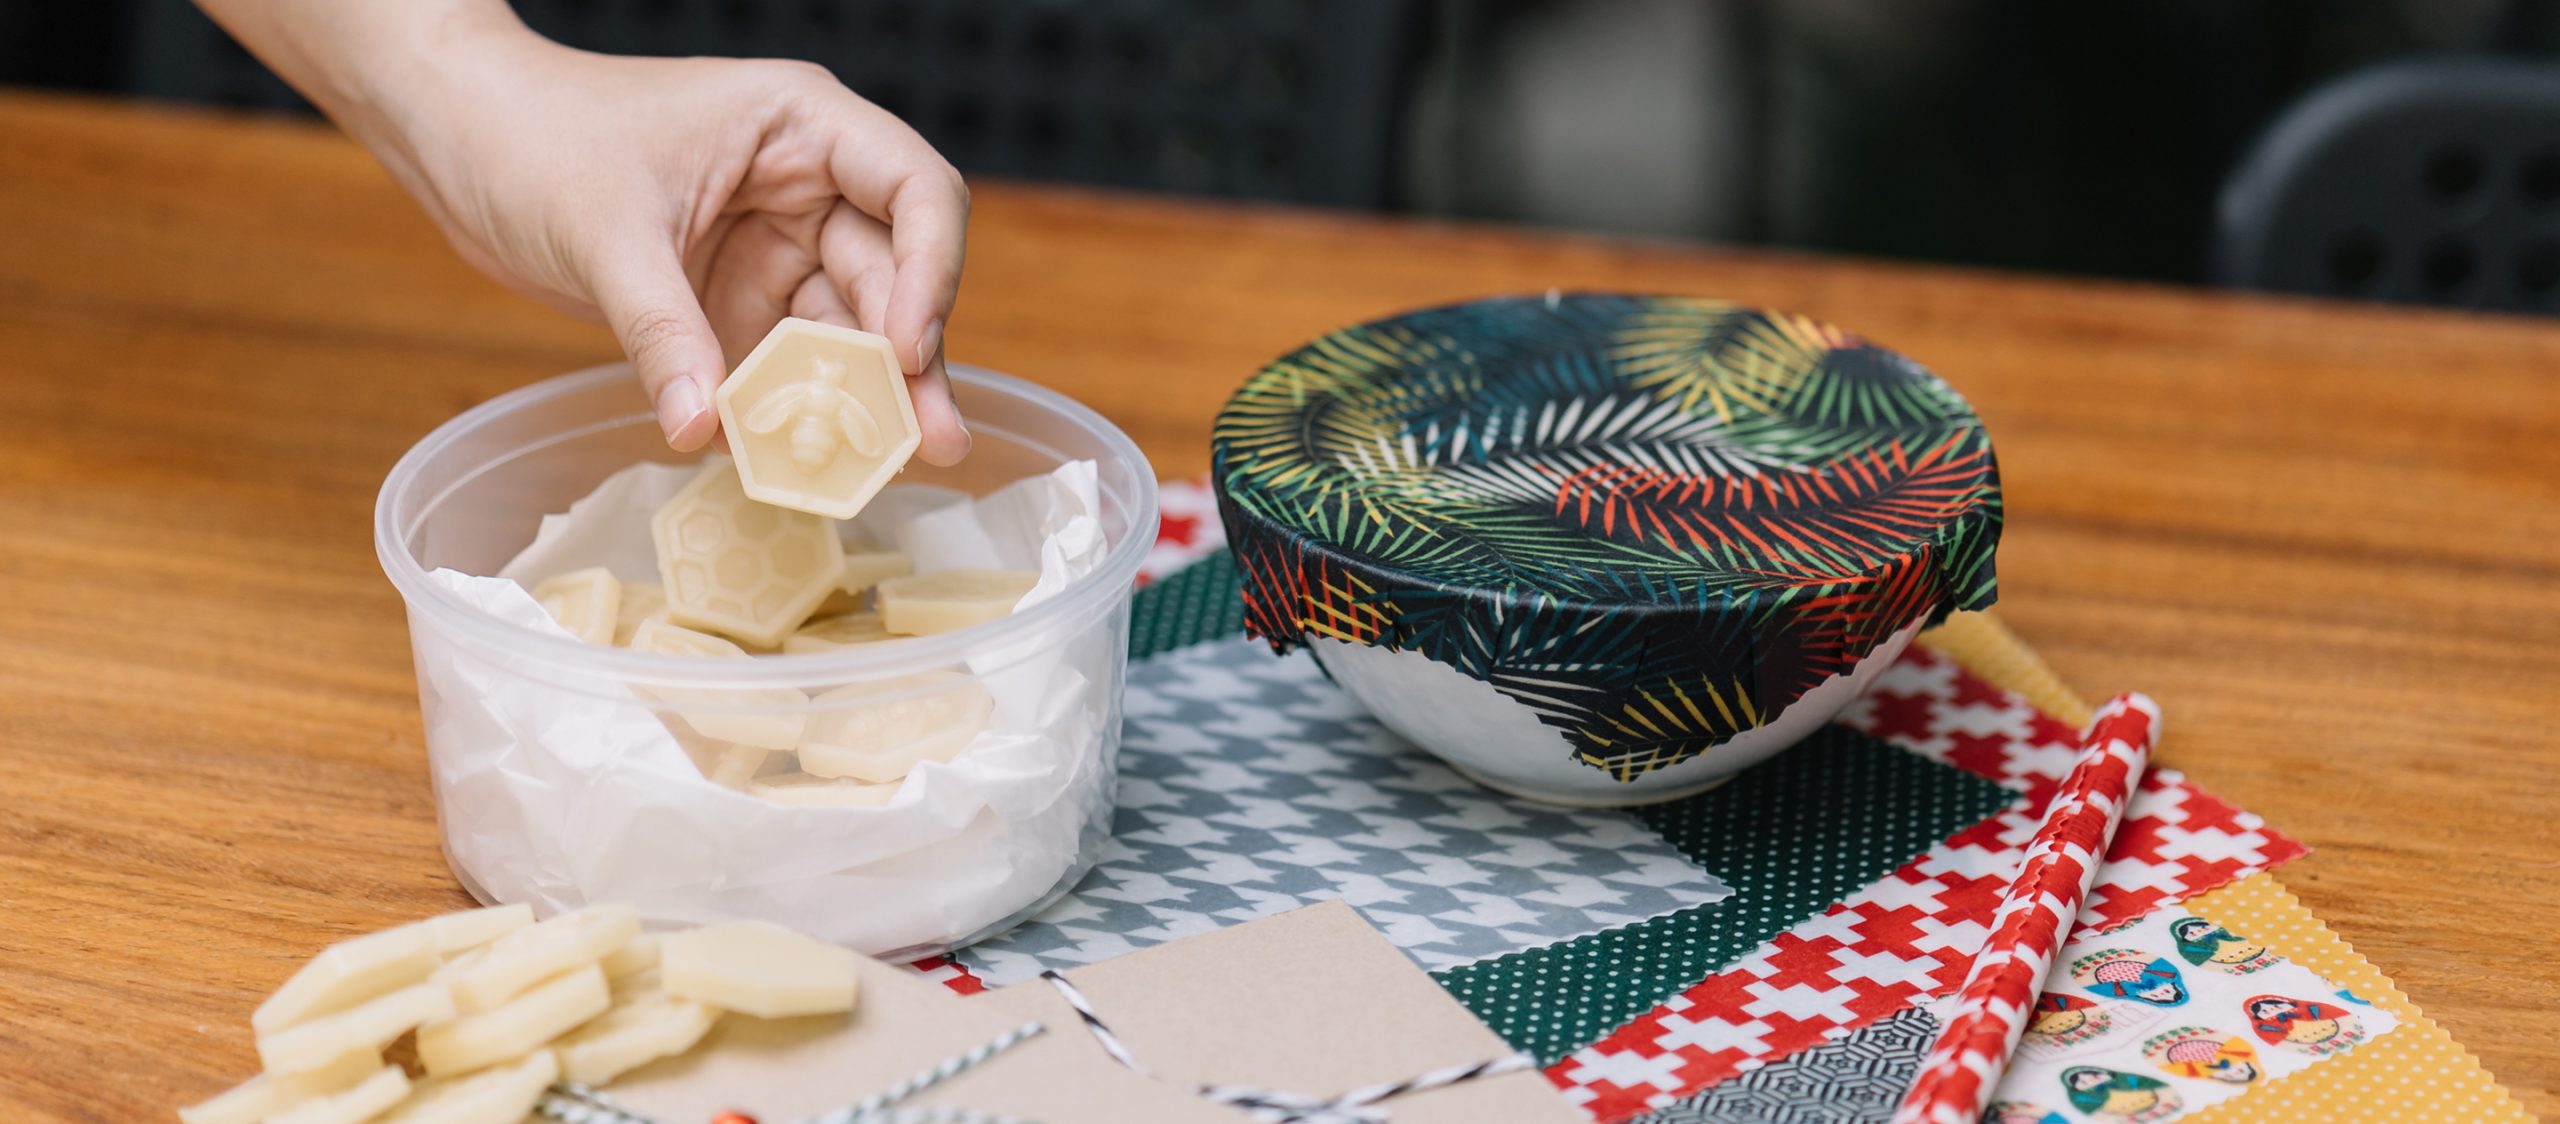 Triple BEEs Wrap : แรปห่ออาหารใช้ซ้ำได้ที่น่ารักพอๆ กับน่าใช้